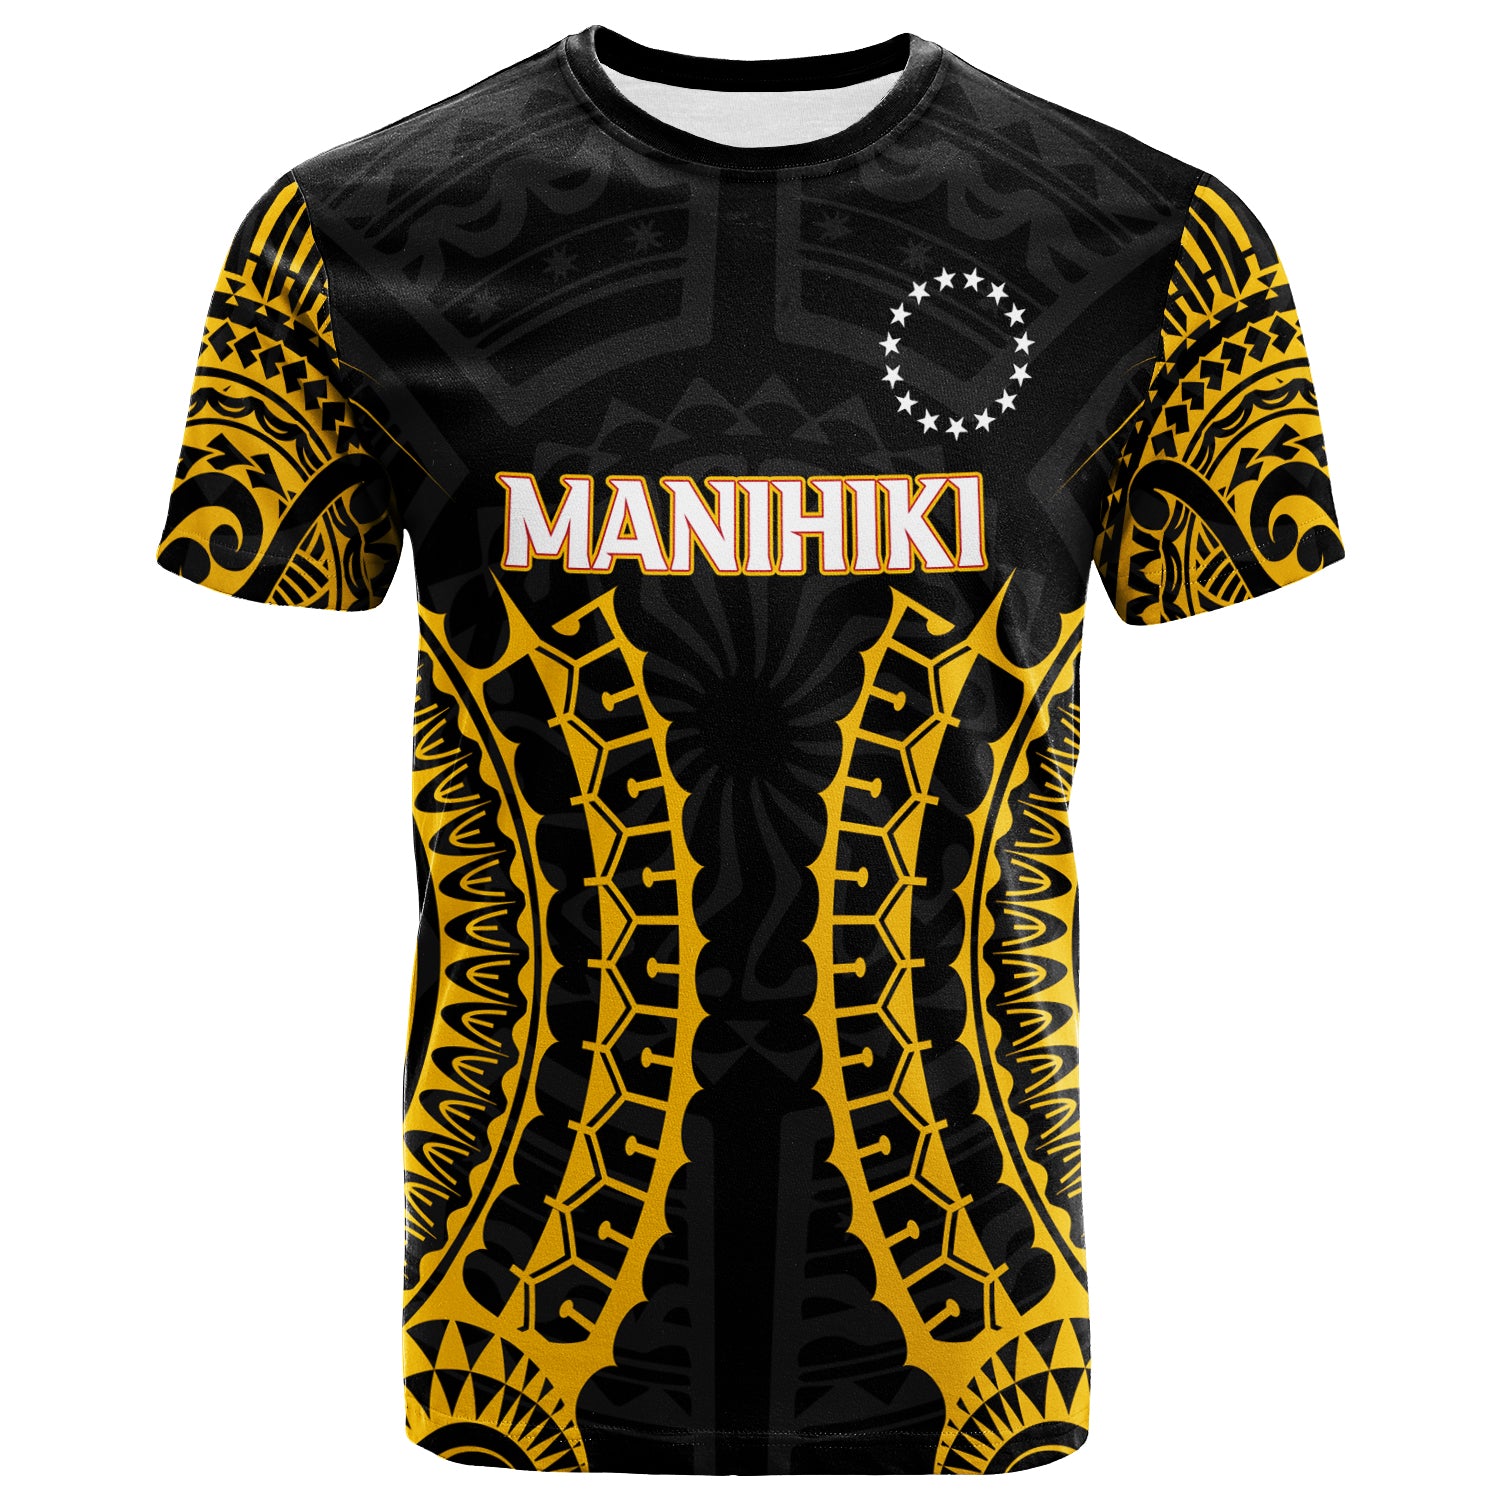 Cook Islands Manihiki T-Shirt - Tribal Pattern